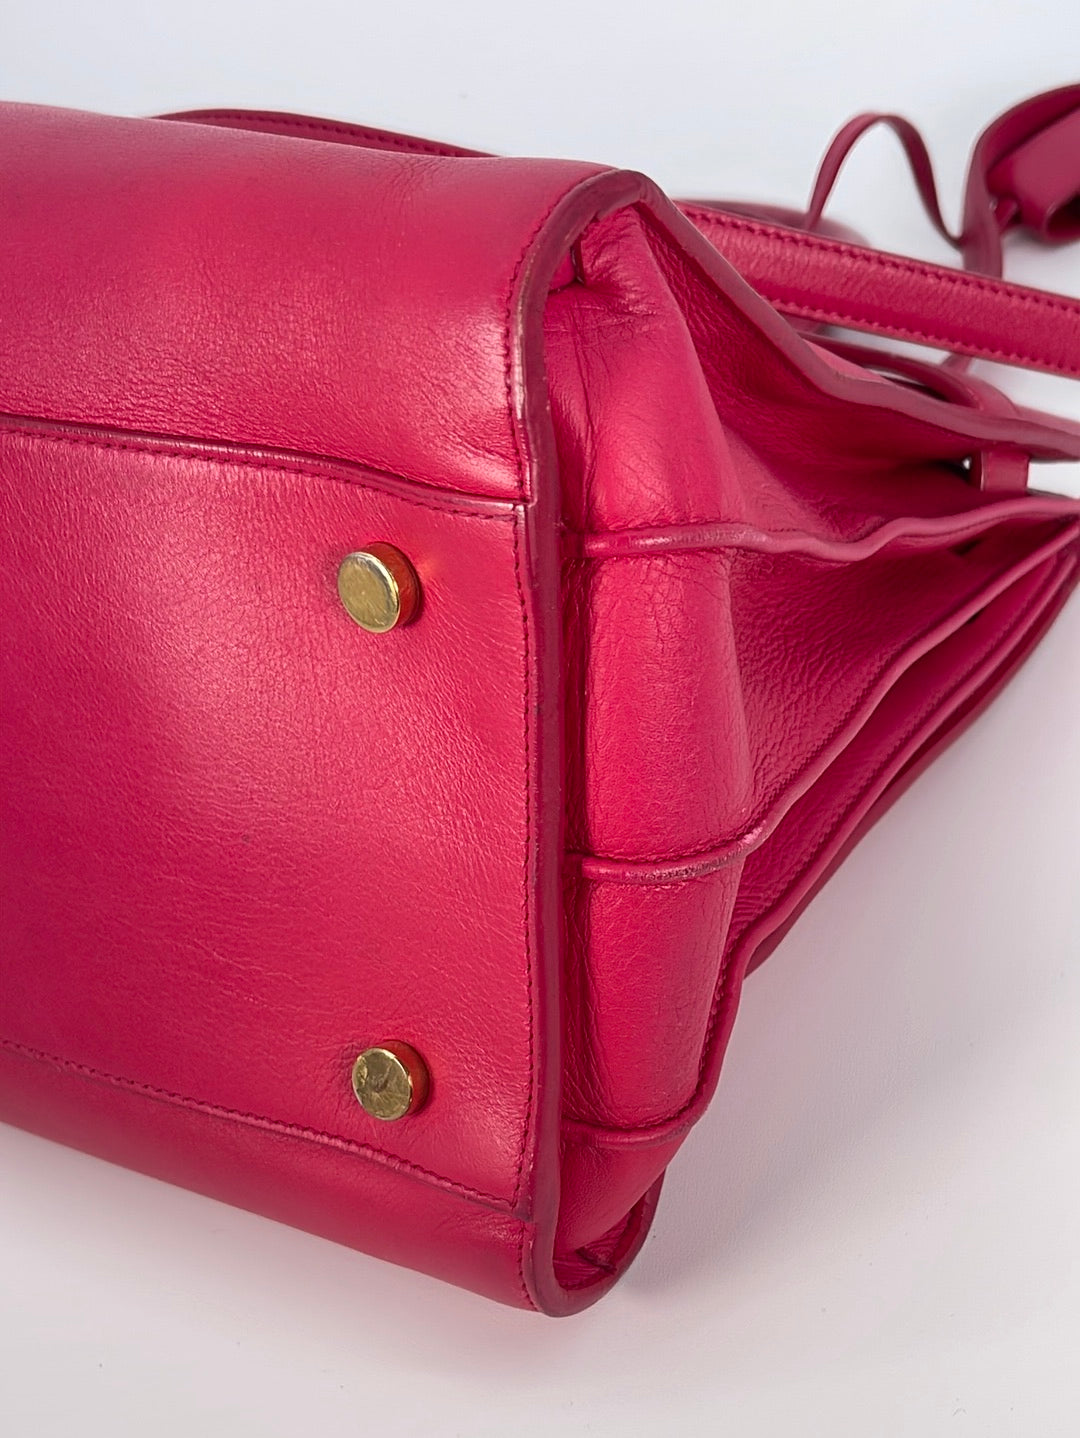 Preloved Saint Laurent Sac de Jour Hot Pink Leather Crossbody Bag 324823527276 030723